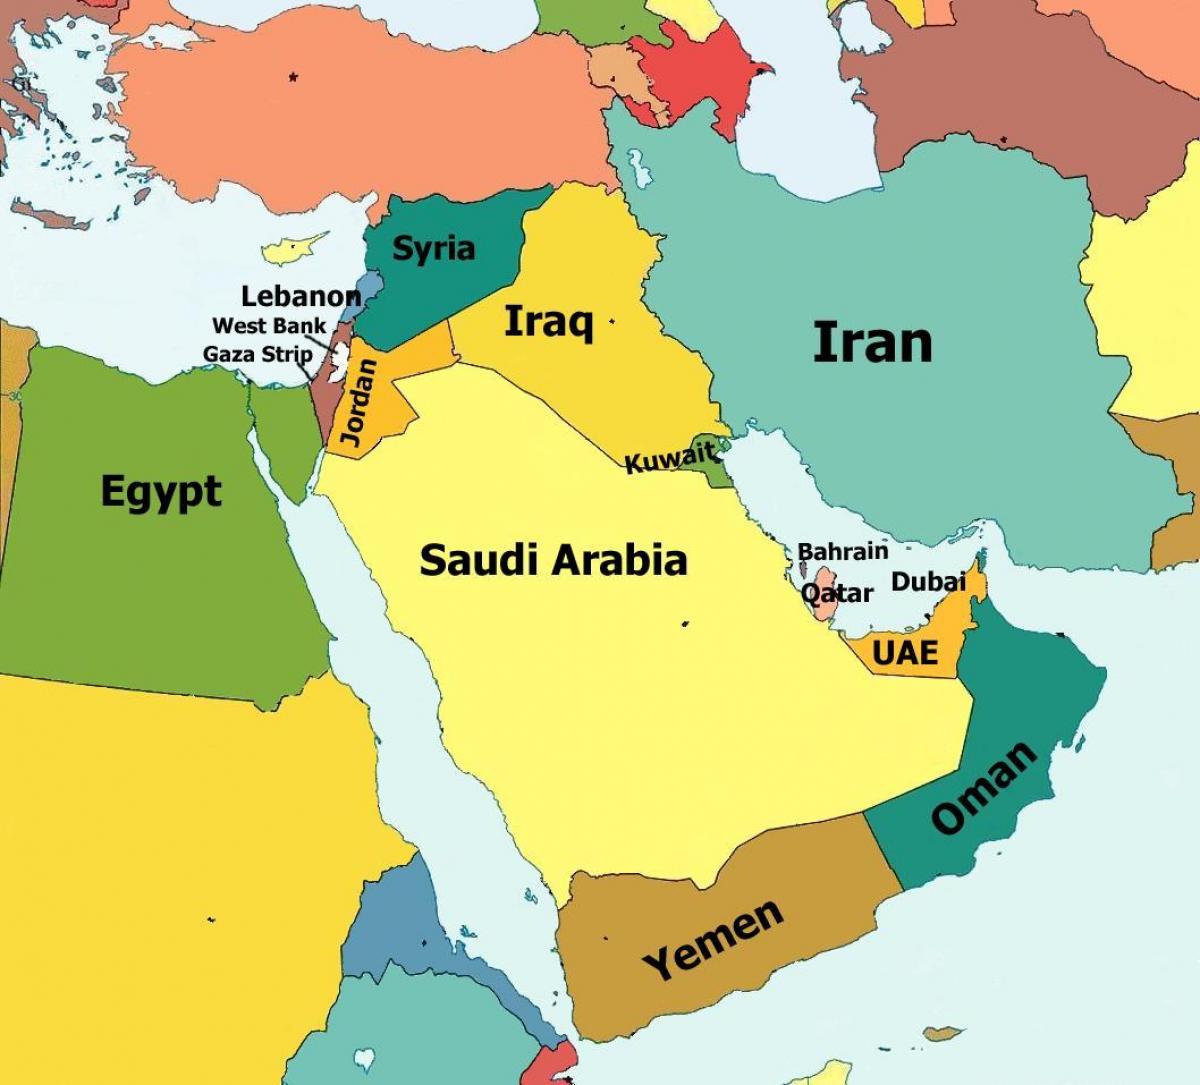 karta bliskog istoka Dubai karta Bliskog Istoka   Dubai karta Bliskog Istoka  karta bliskog istoka